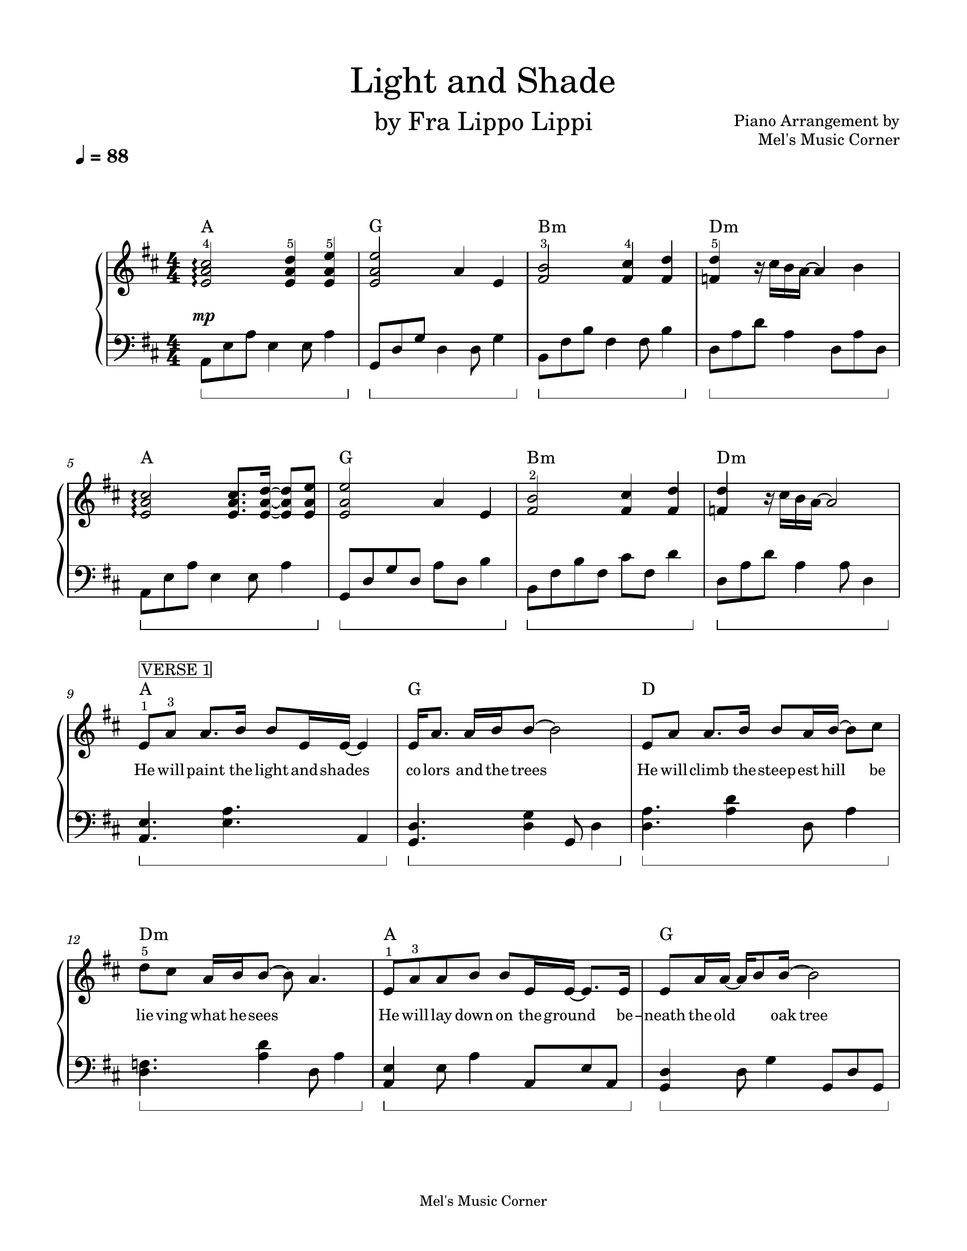 Fra Lippo Lippi - Light and Shade (piano sheet music) by Mel's Music Corner